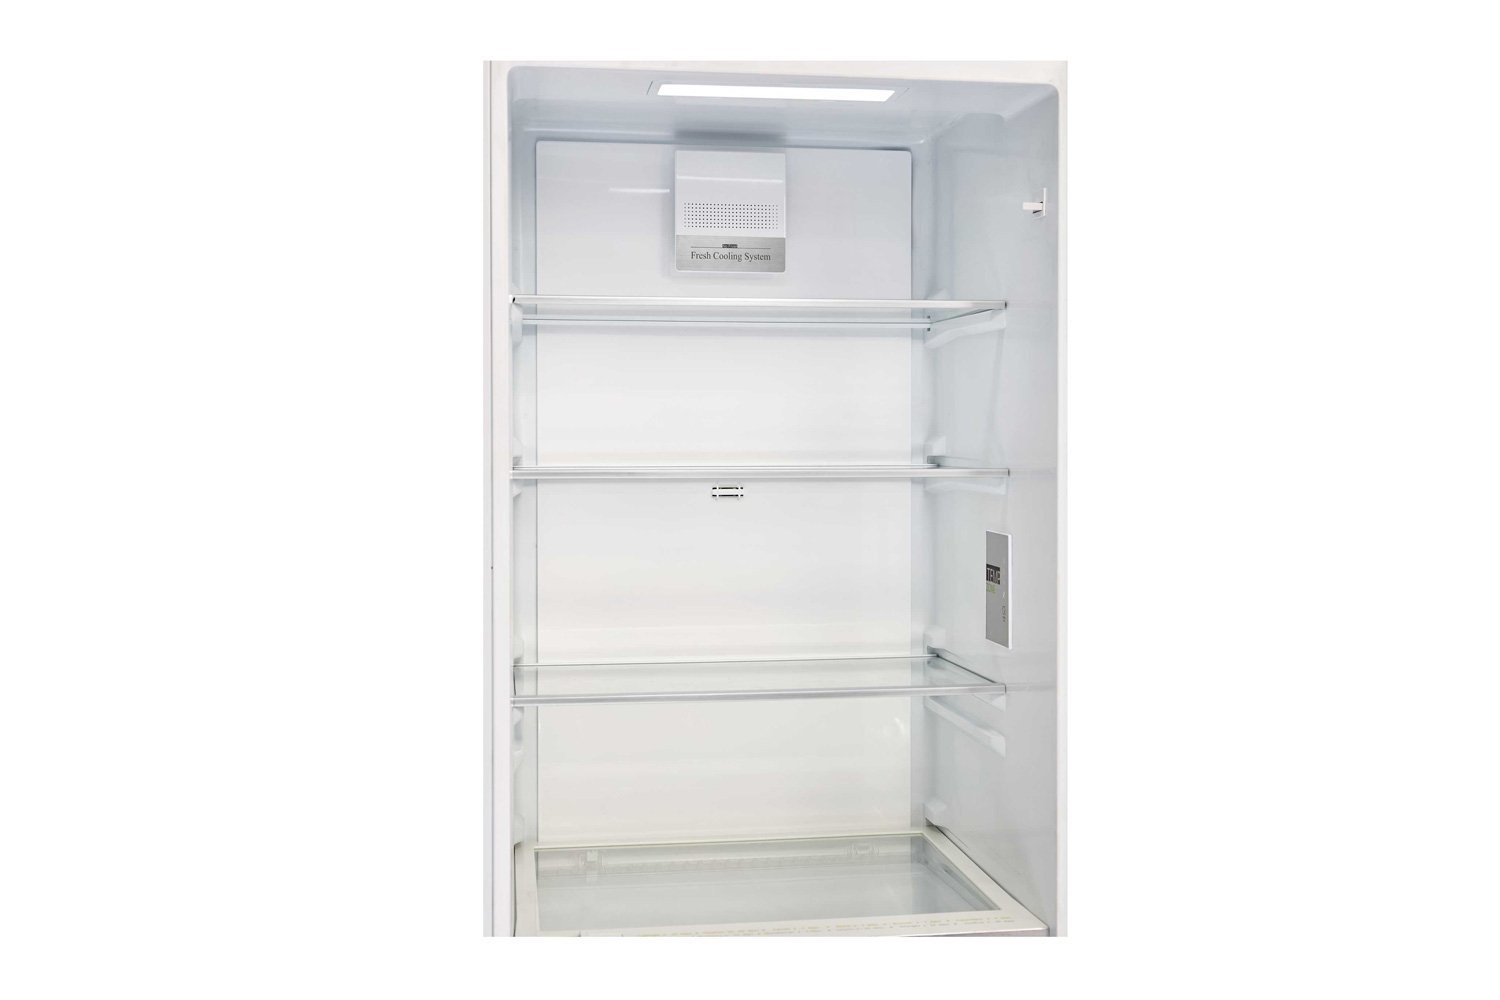 Холодильник KFS 17935 CFNF